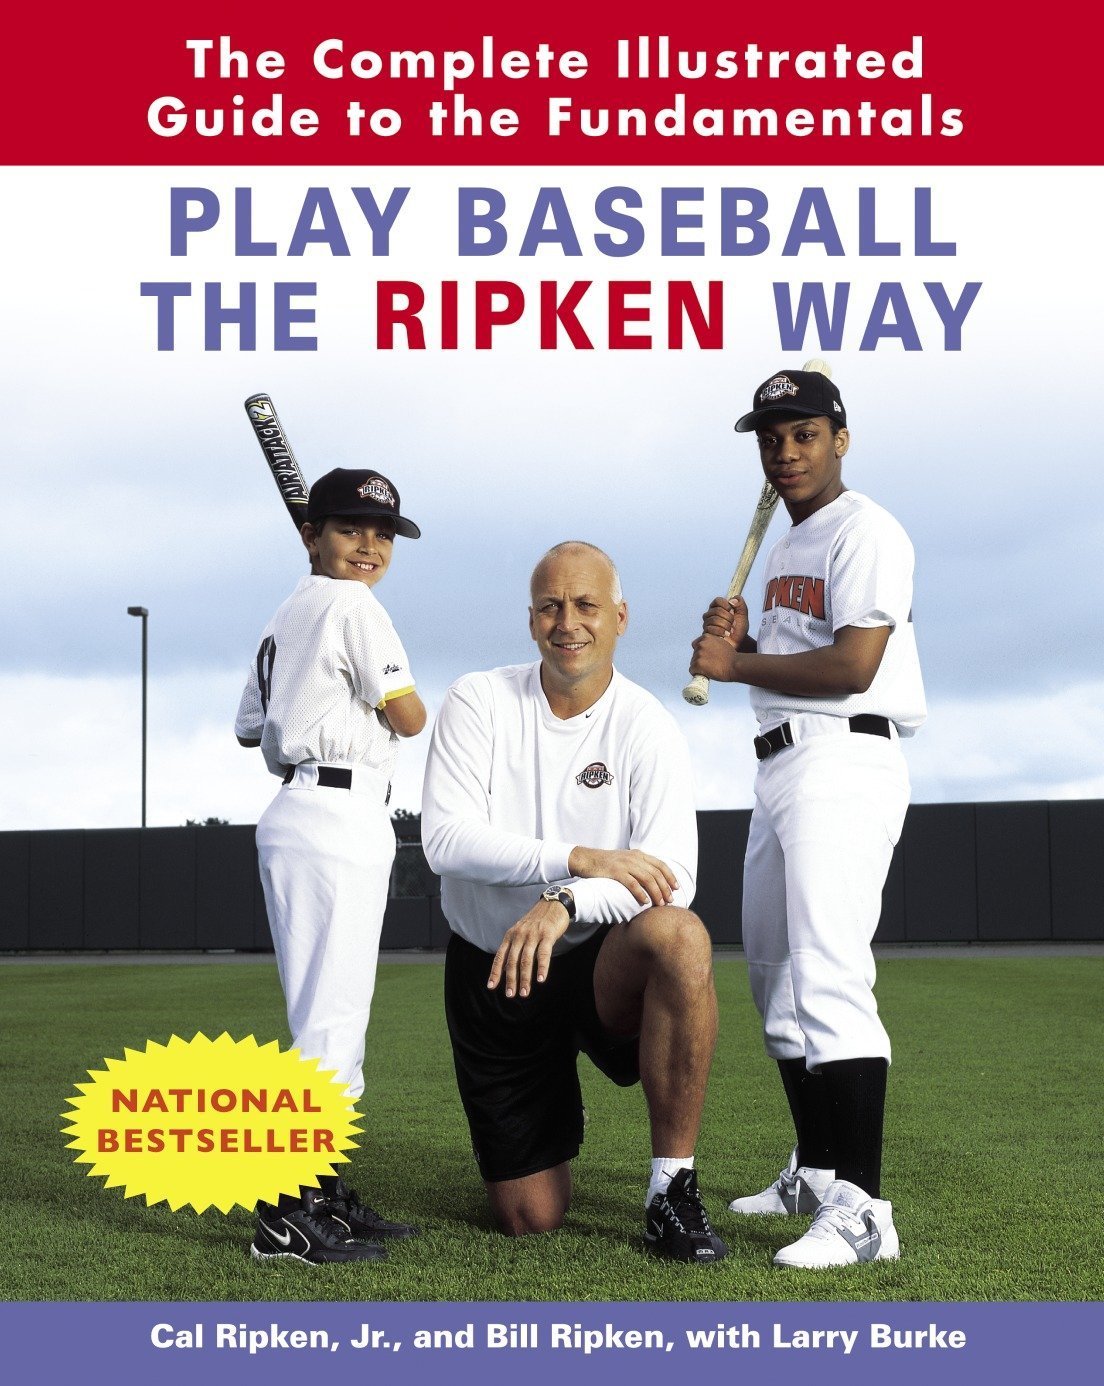 Play Baseball the Ripken Way: The Complete Illustrated Guide to the Fundamentals by Cal Ripken Jr., Bill Ripken & Larry Burke